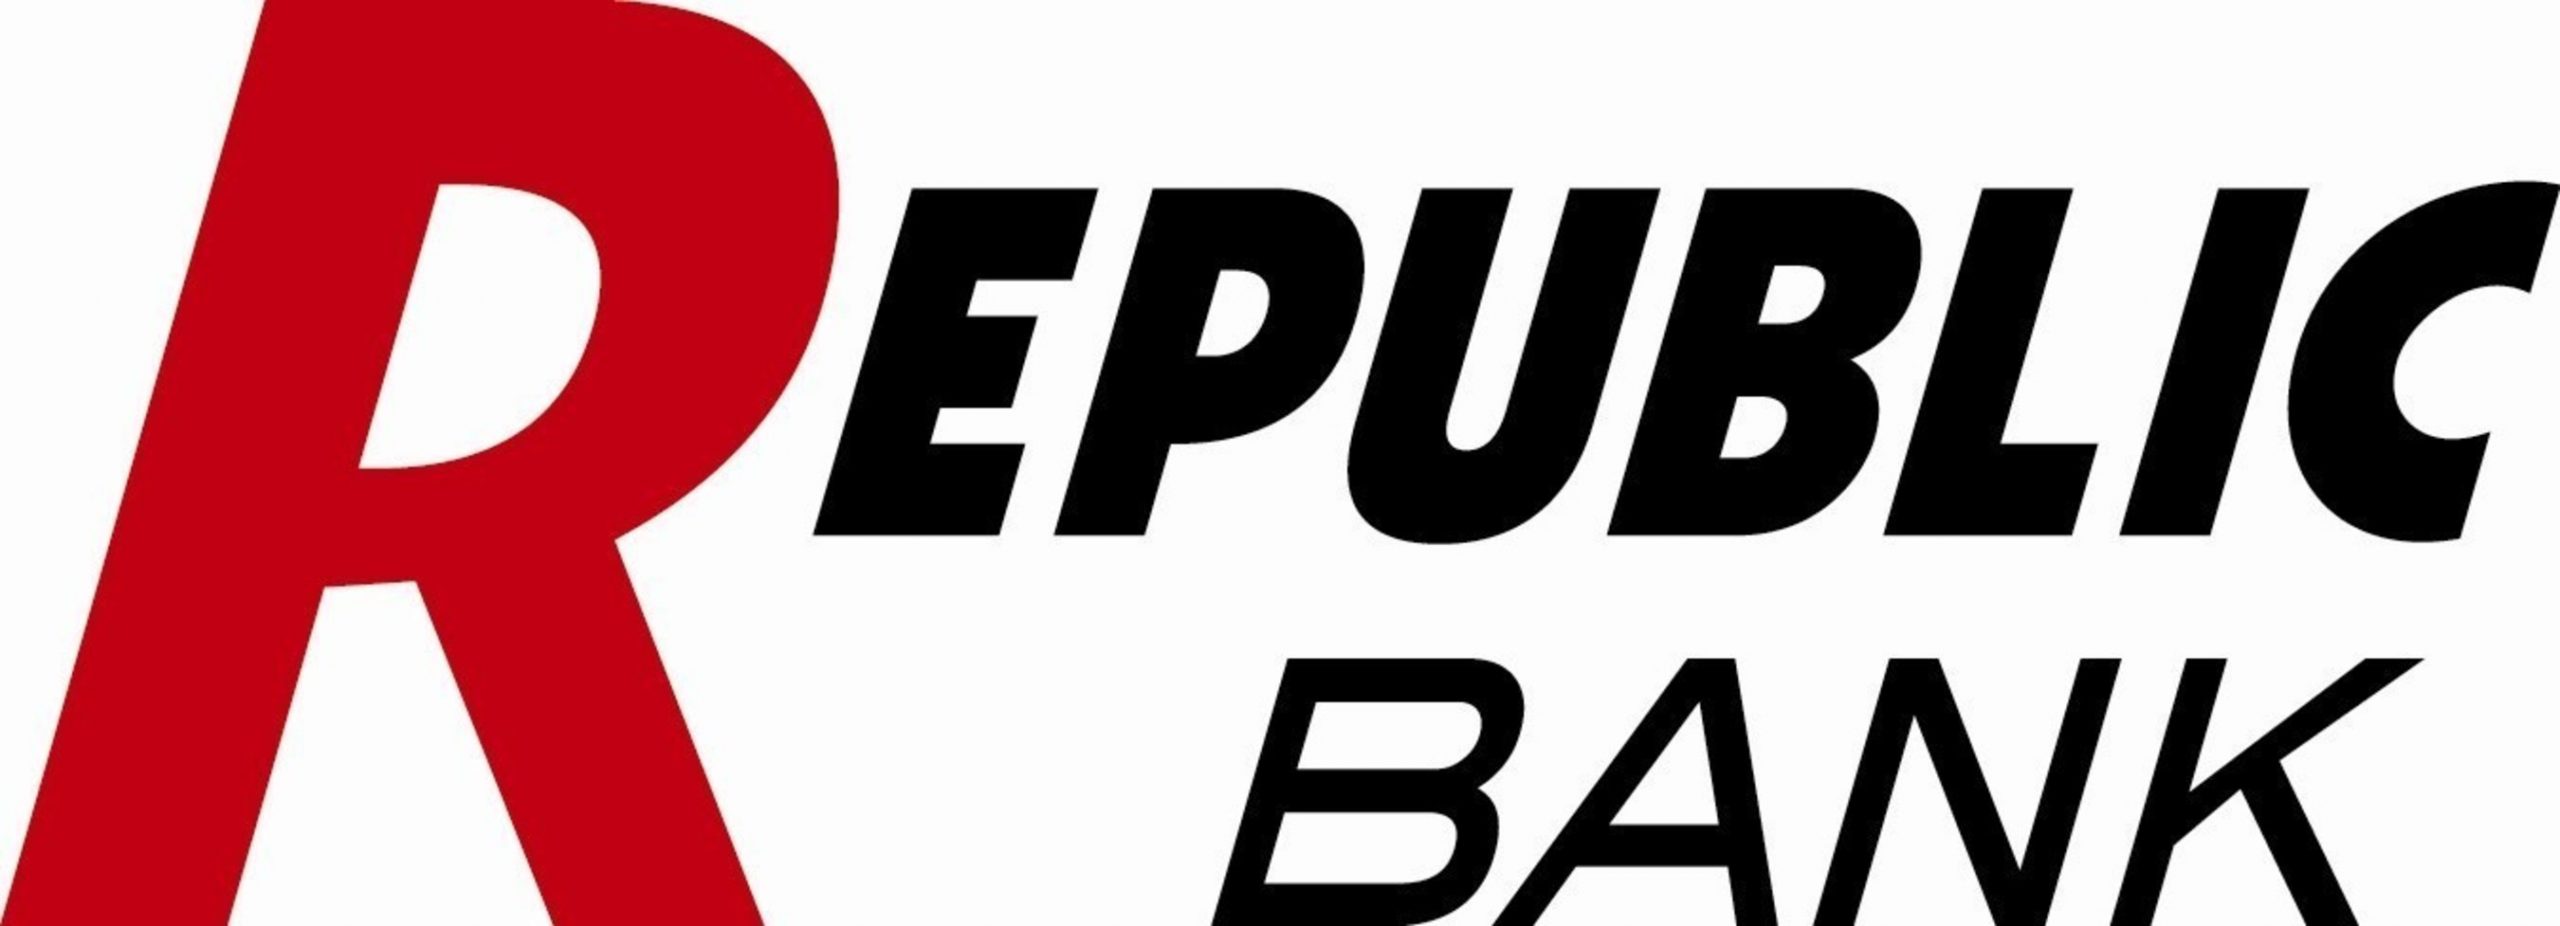 Republic Bank logo. (PRNewsFoto/Republic First Bancorp, Inc.)